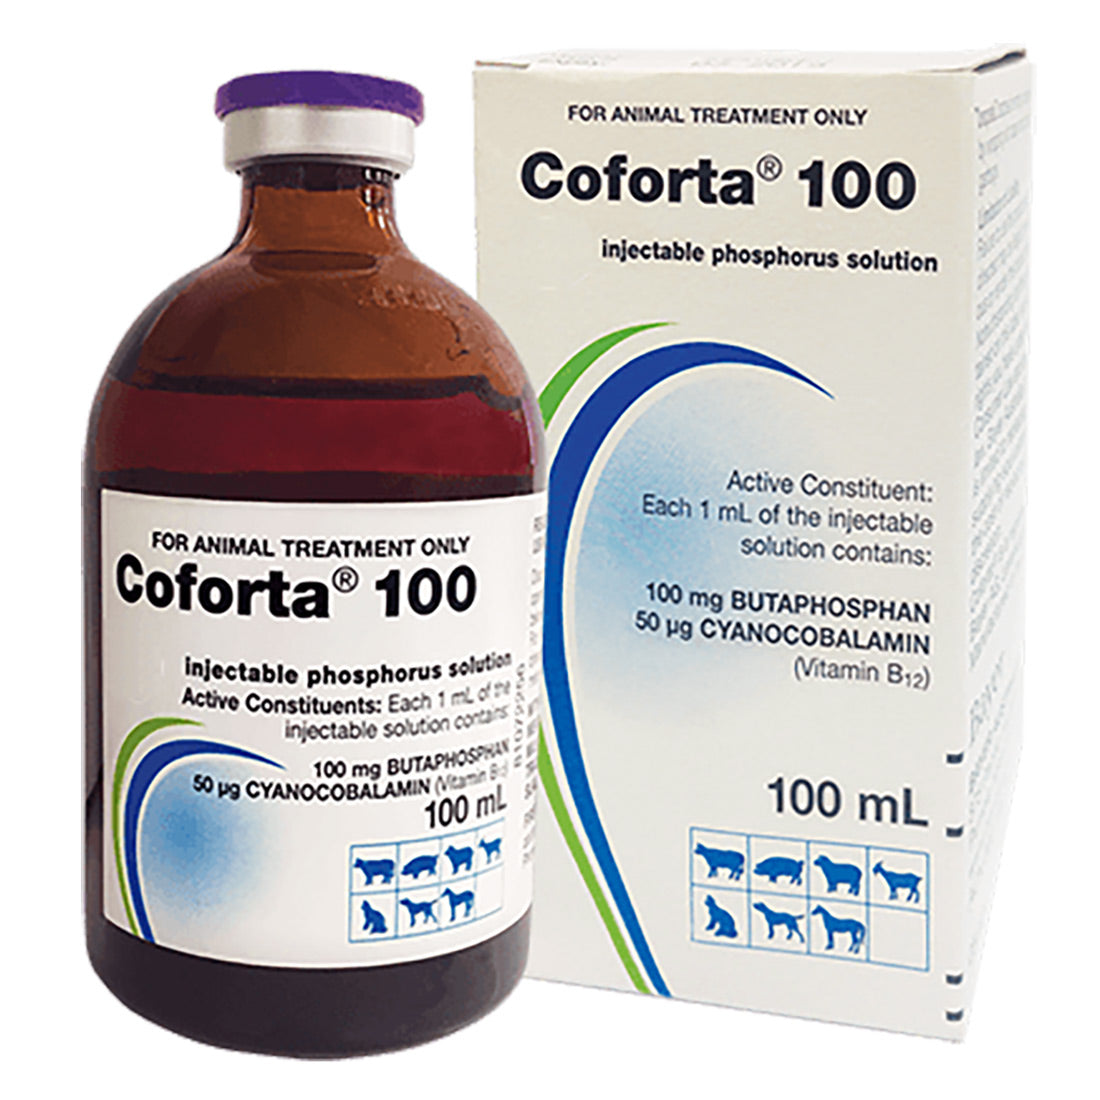 Coforta 100 Injectable Phosphorus Solution 100ml